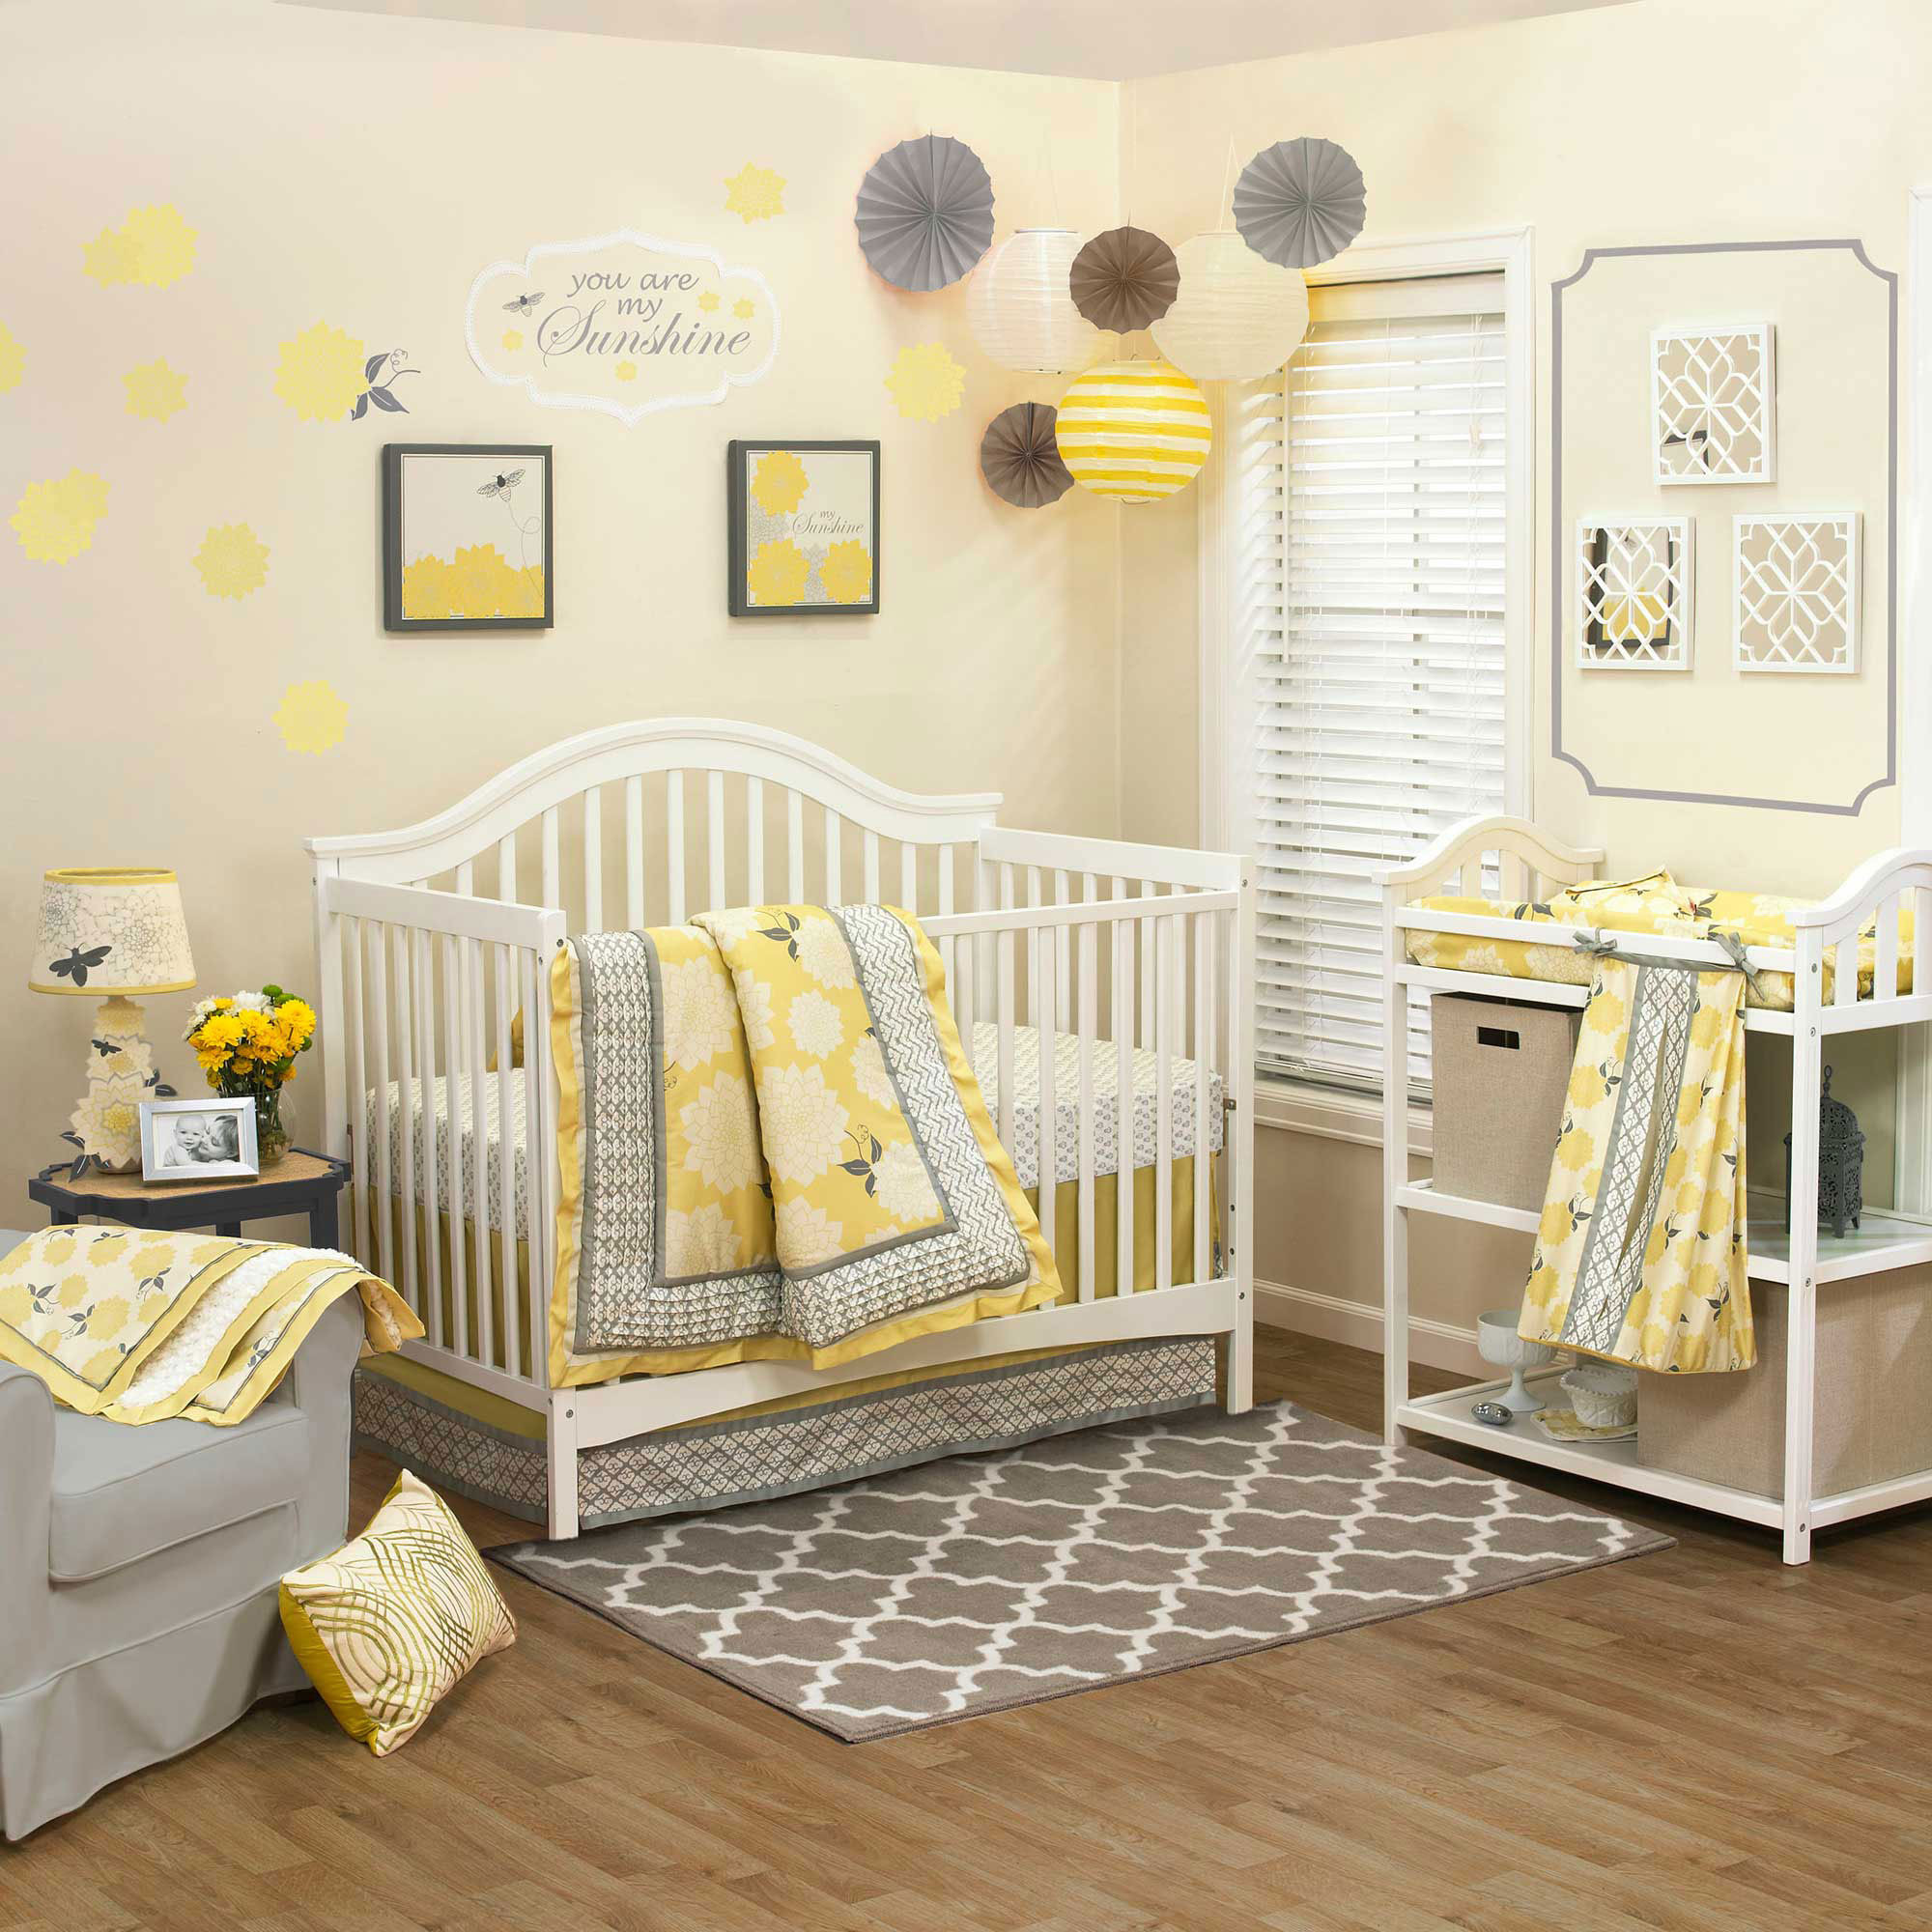 Baby Girl Room Decoration Ideas
 Baby Girl Nursery Ideas 10 Pretty Examples Decorating Room